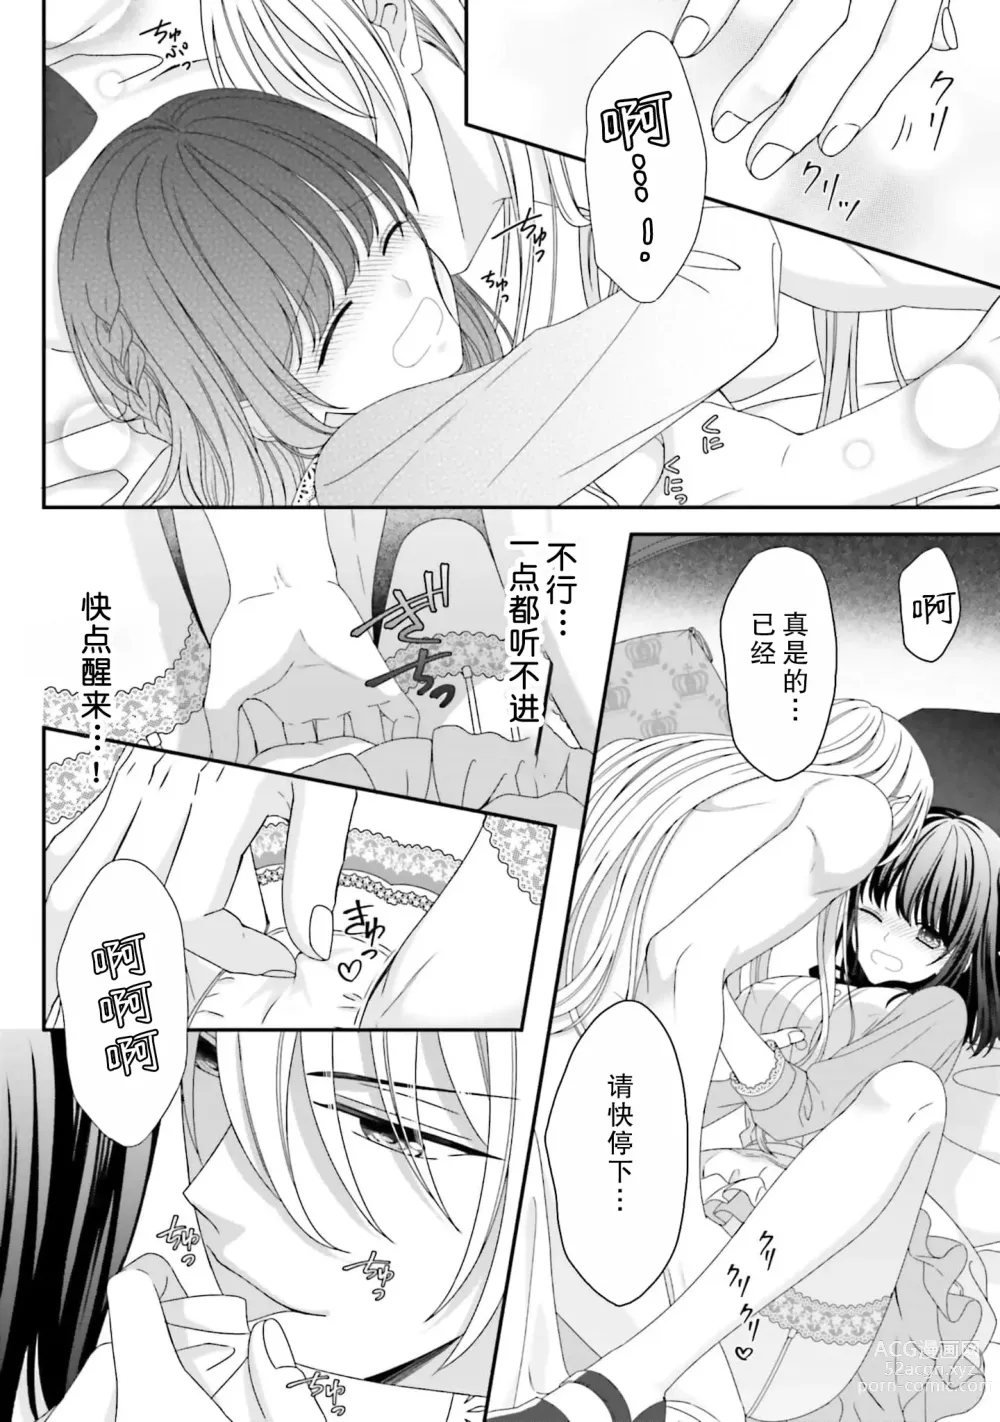 Page 9 of manga 在异世界被非凡的魔导师买下的话会被异常宠爱。 1-8